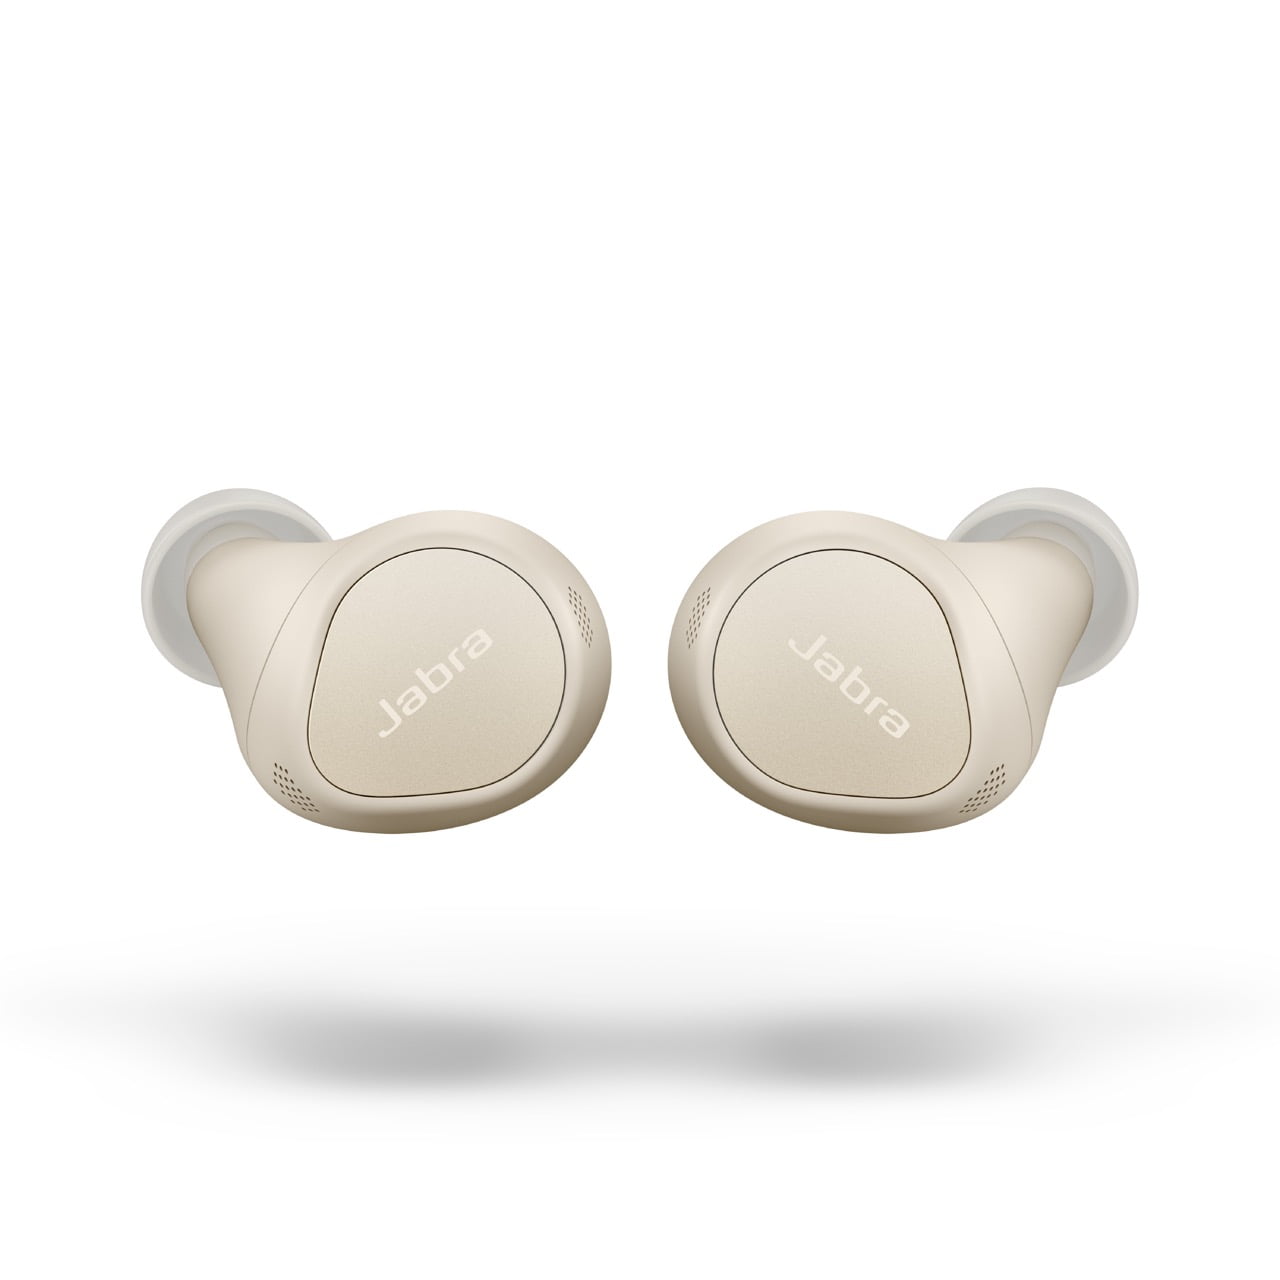 Jabra Elite 7 Pro in-Ear Bluetooth Earbuds, Noise Cancelling, Gold Beige